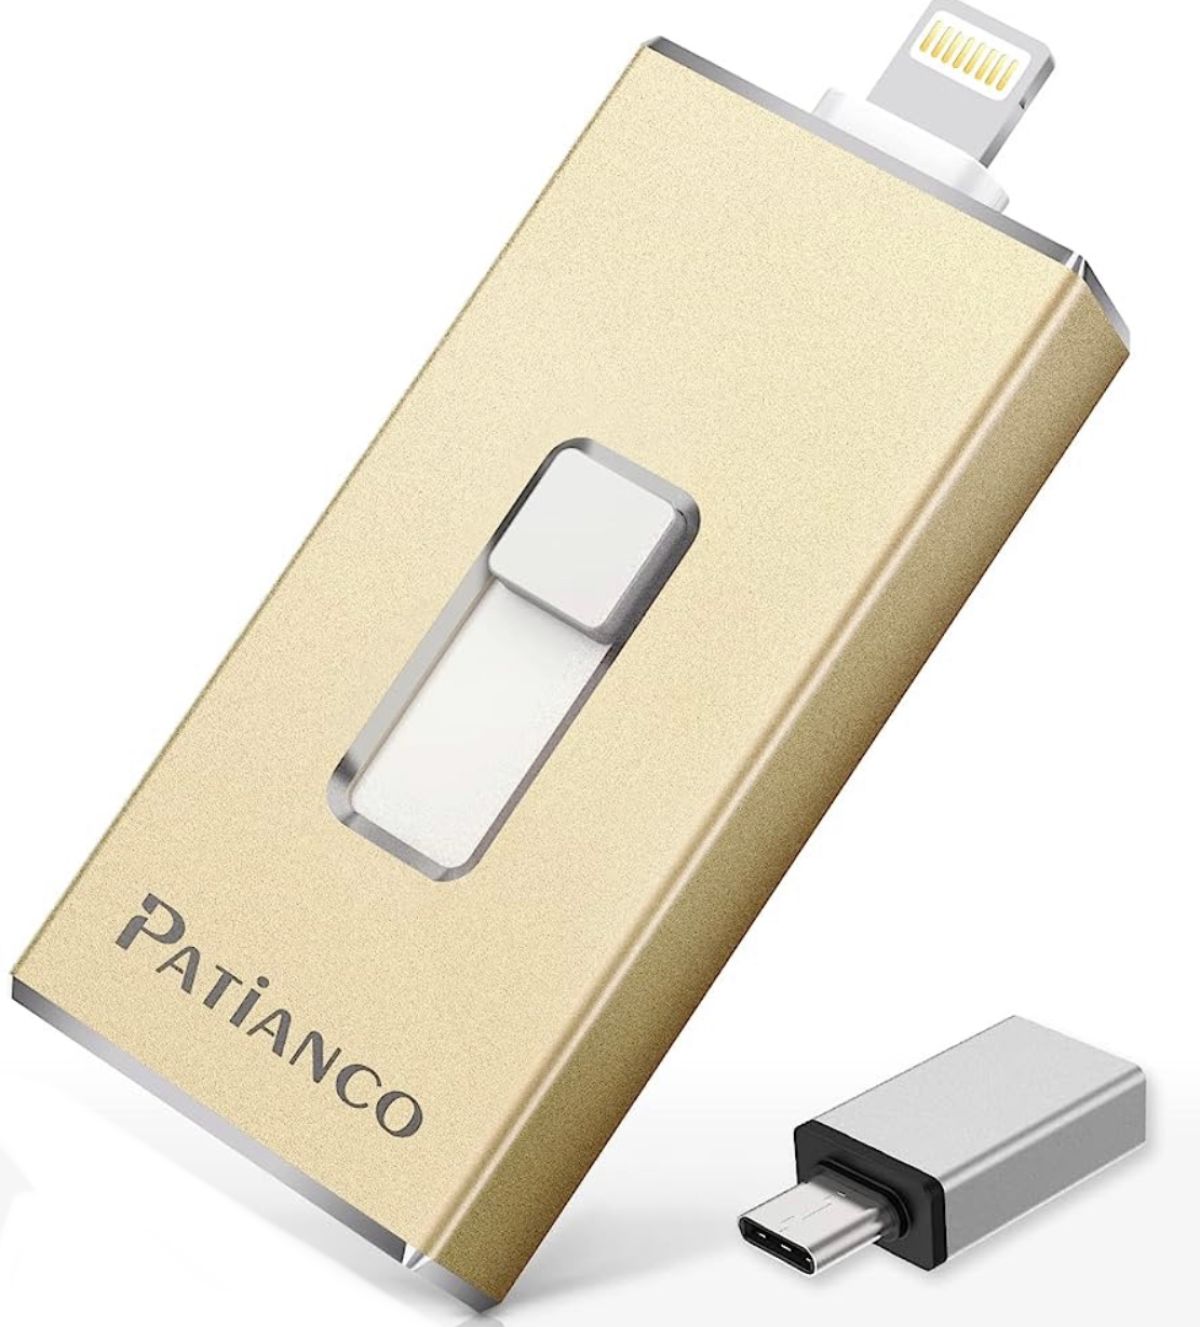 Patianco iExpand 128Go Cle usb Gold